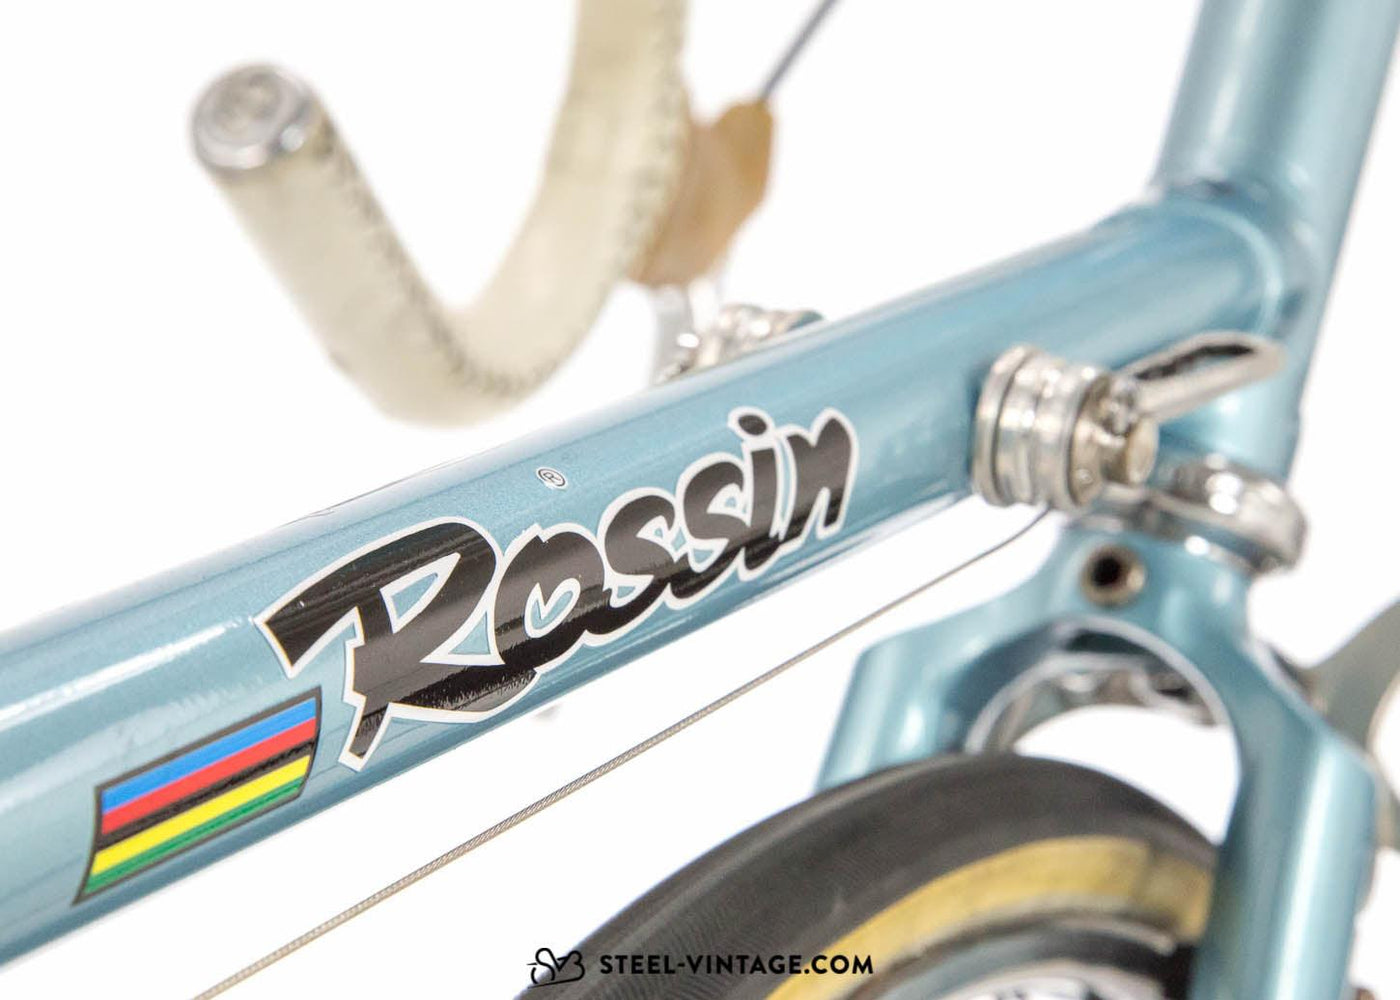 Rossin Special Classic Road Bike 1970s - Steel Vintage Bikes